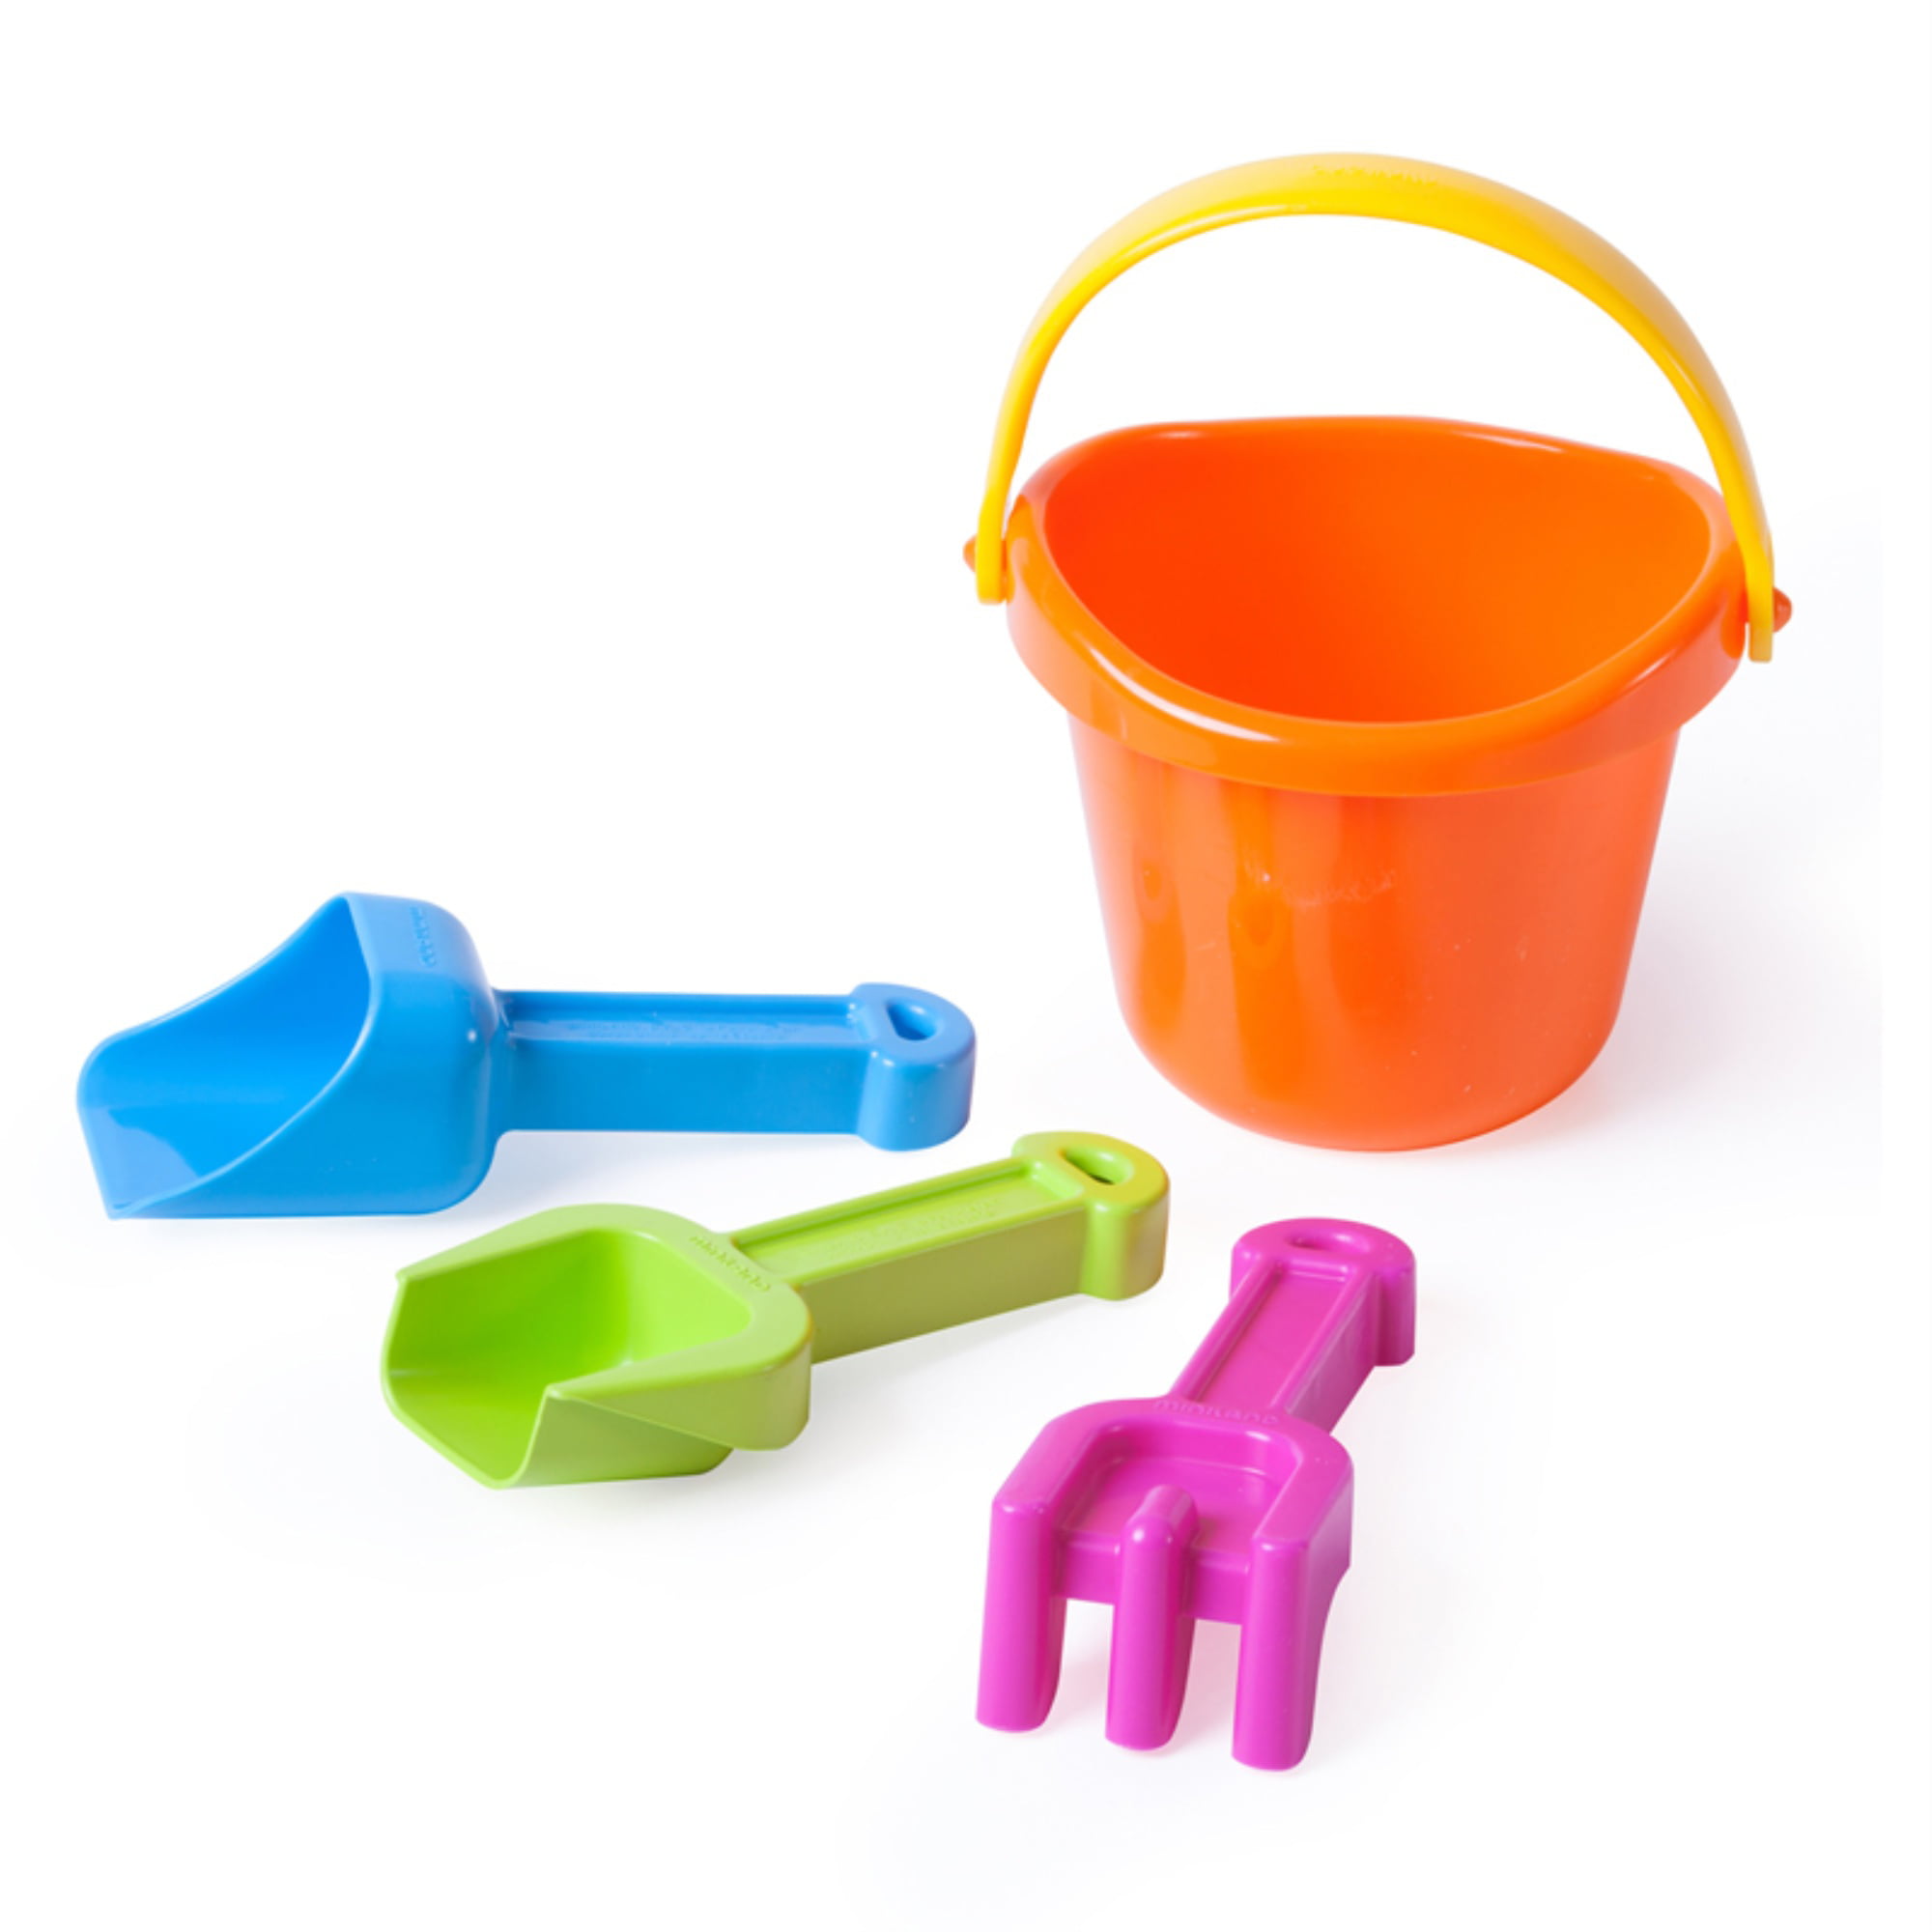 Sacow_ Kids Beach Toys Set Sand Molds Tools Sandbox Toys On Summer Holiday 11pc